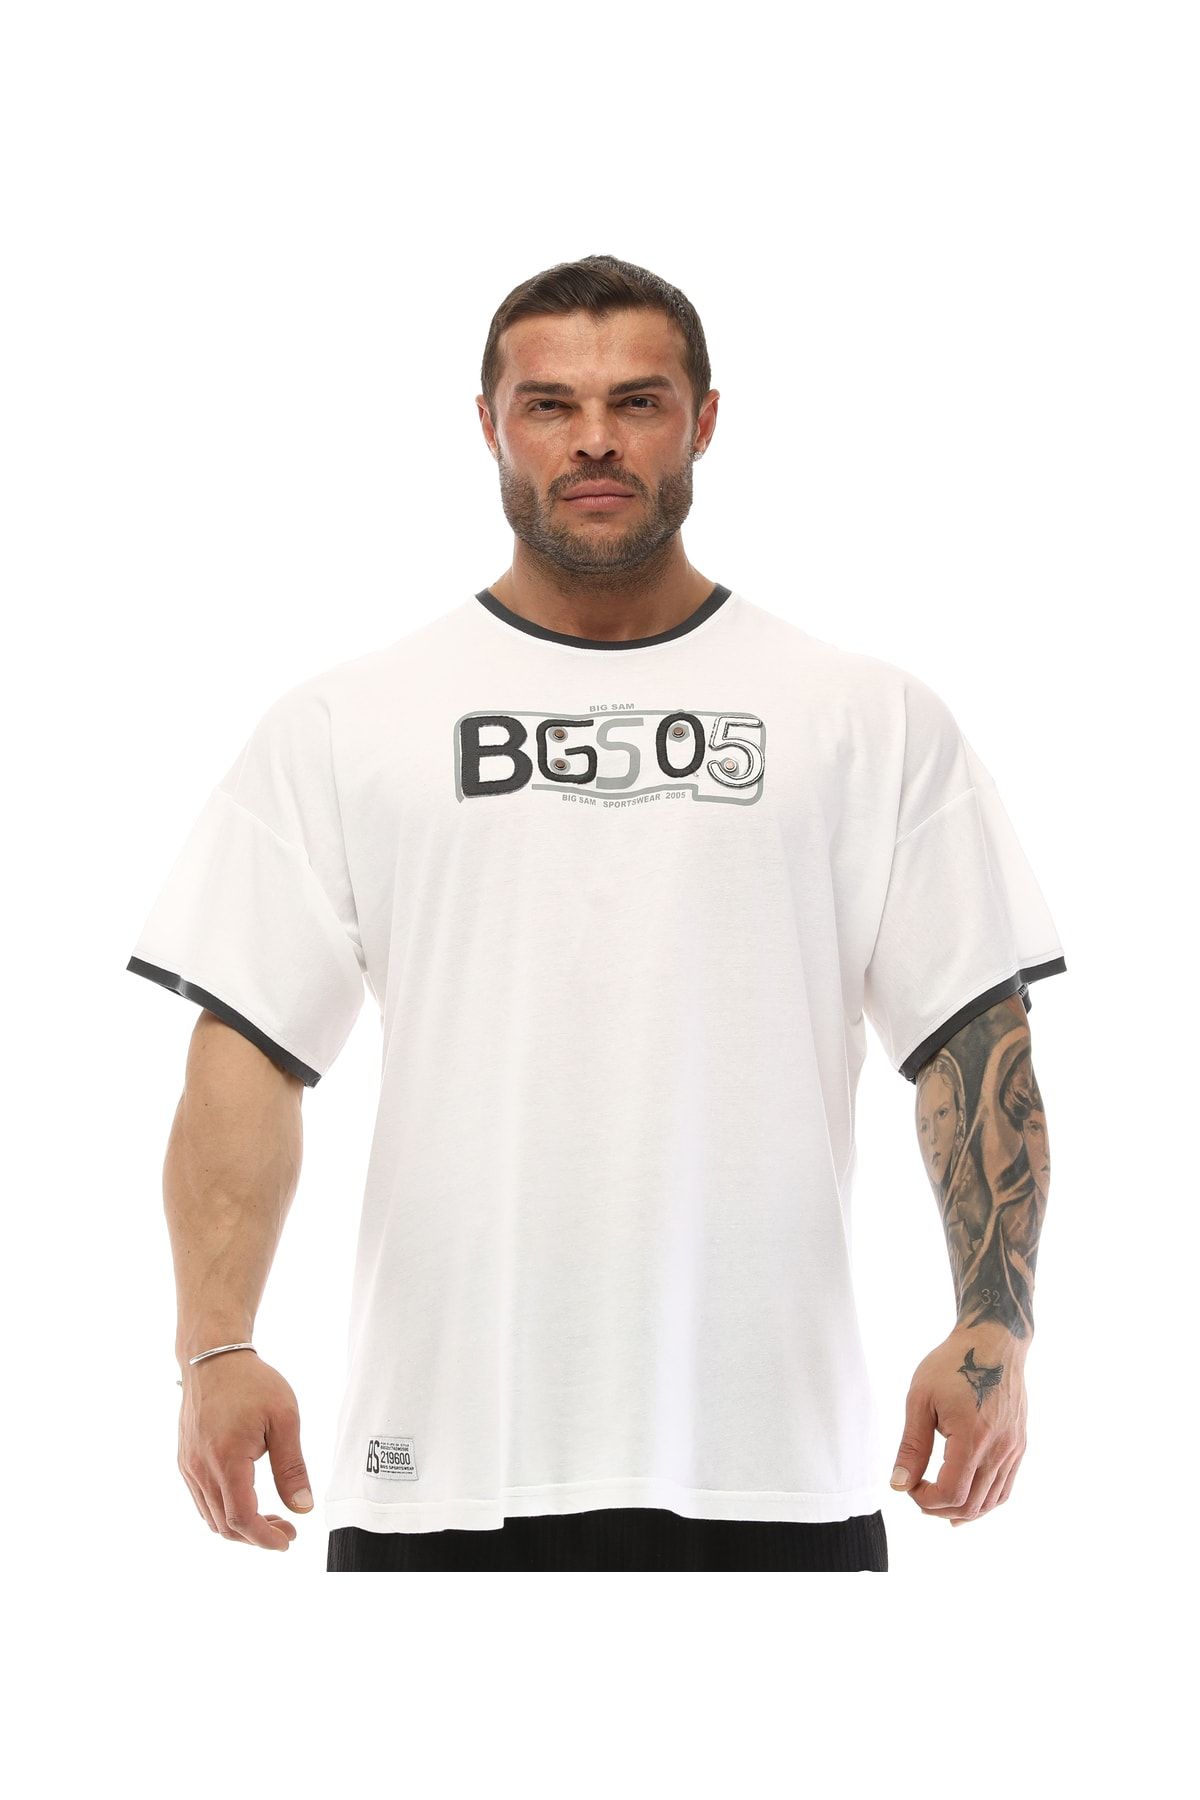 Big Sam Beyaz Antrenman Tişörtü 2586